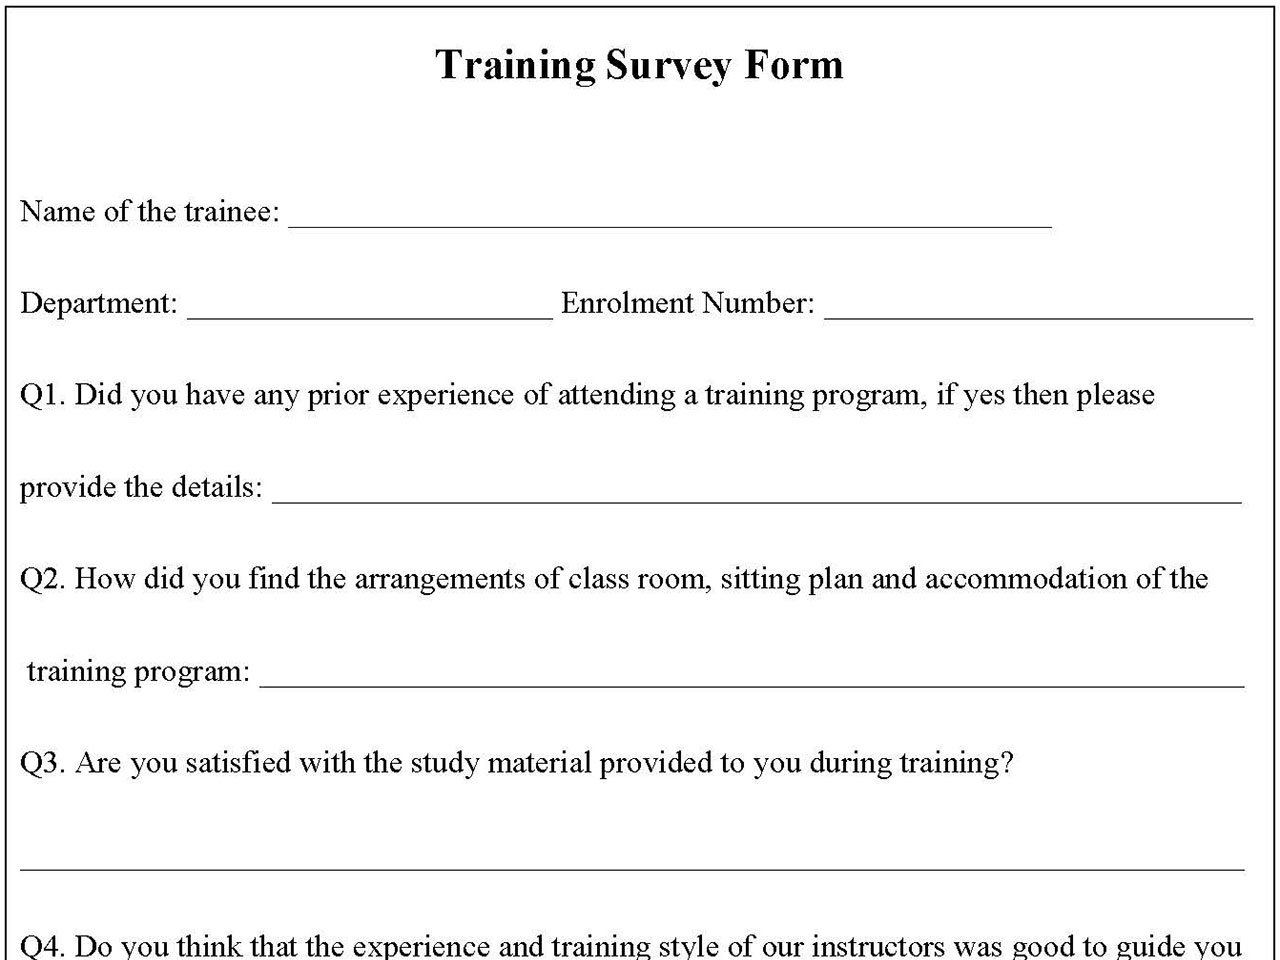 Training survey form